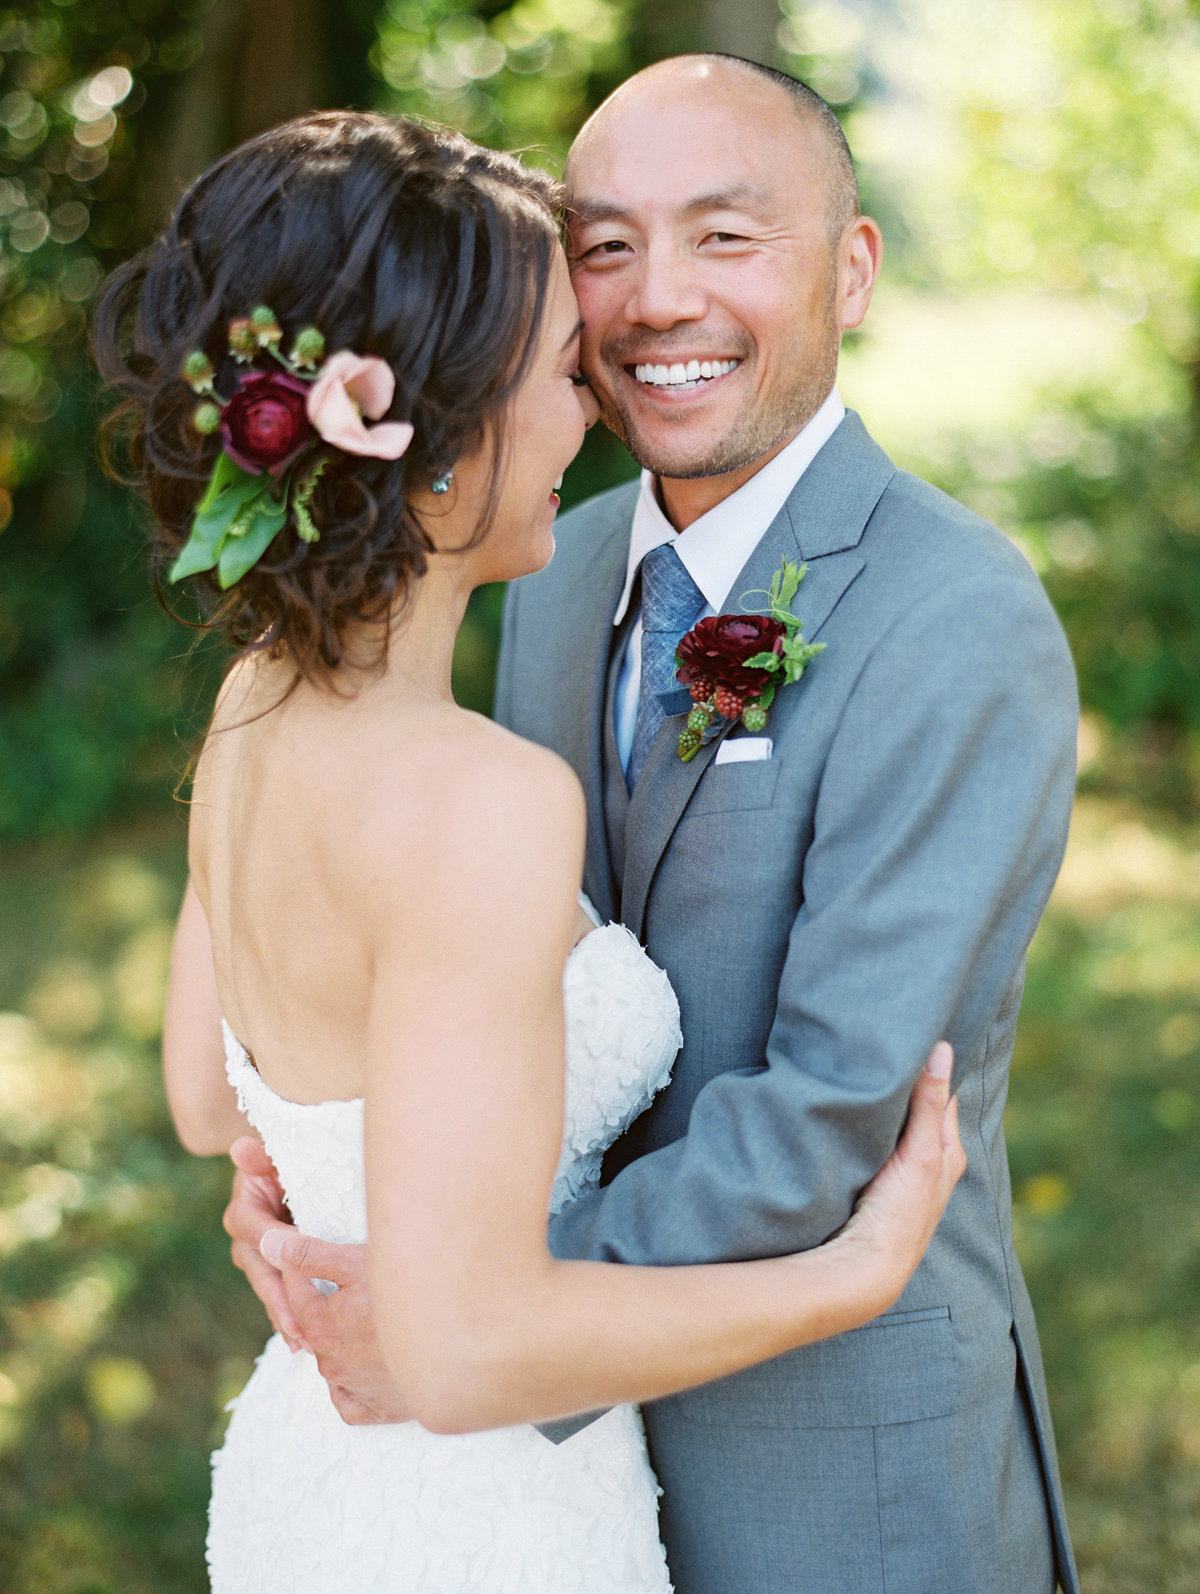 Accent Flowers in Hair for Bride Destination Wedding Photographer © Bonnie Sen Photography